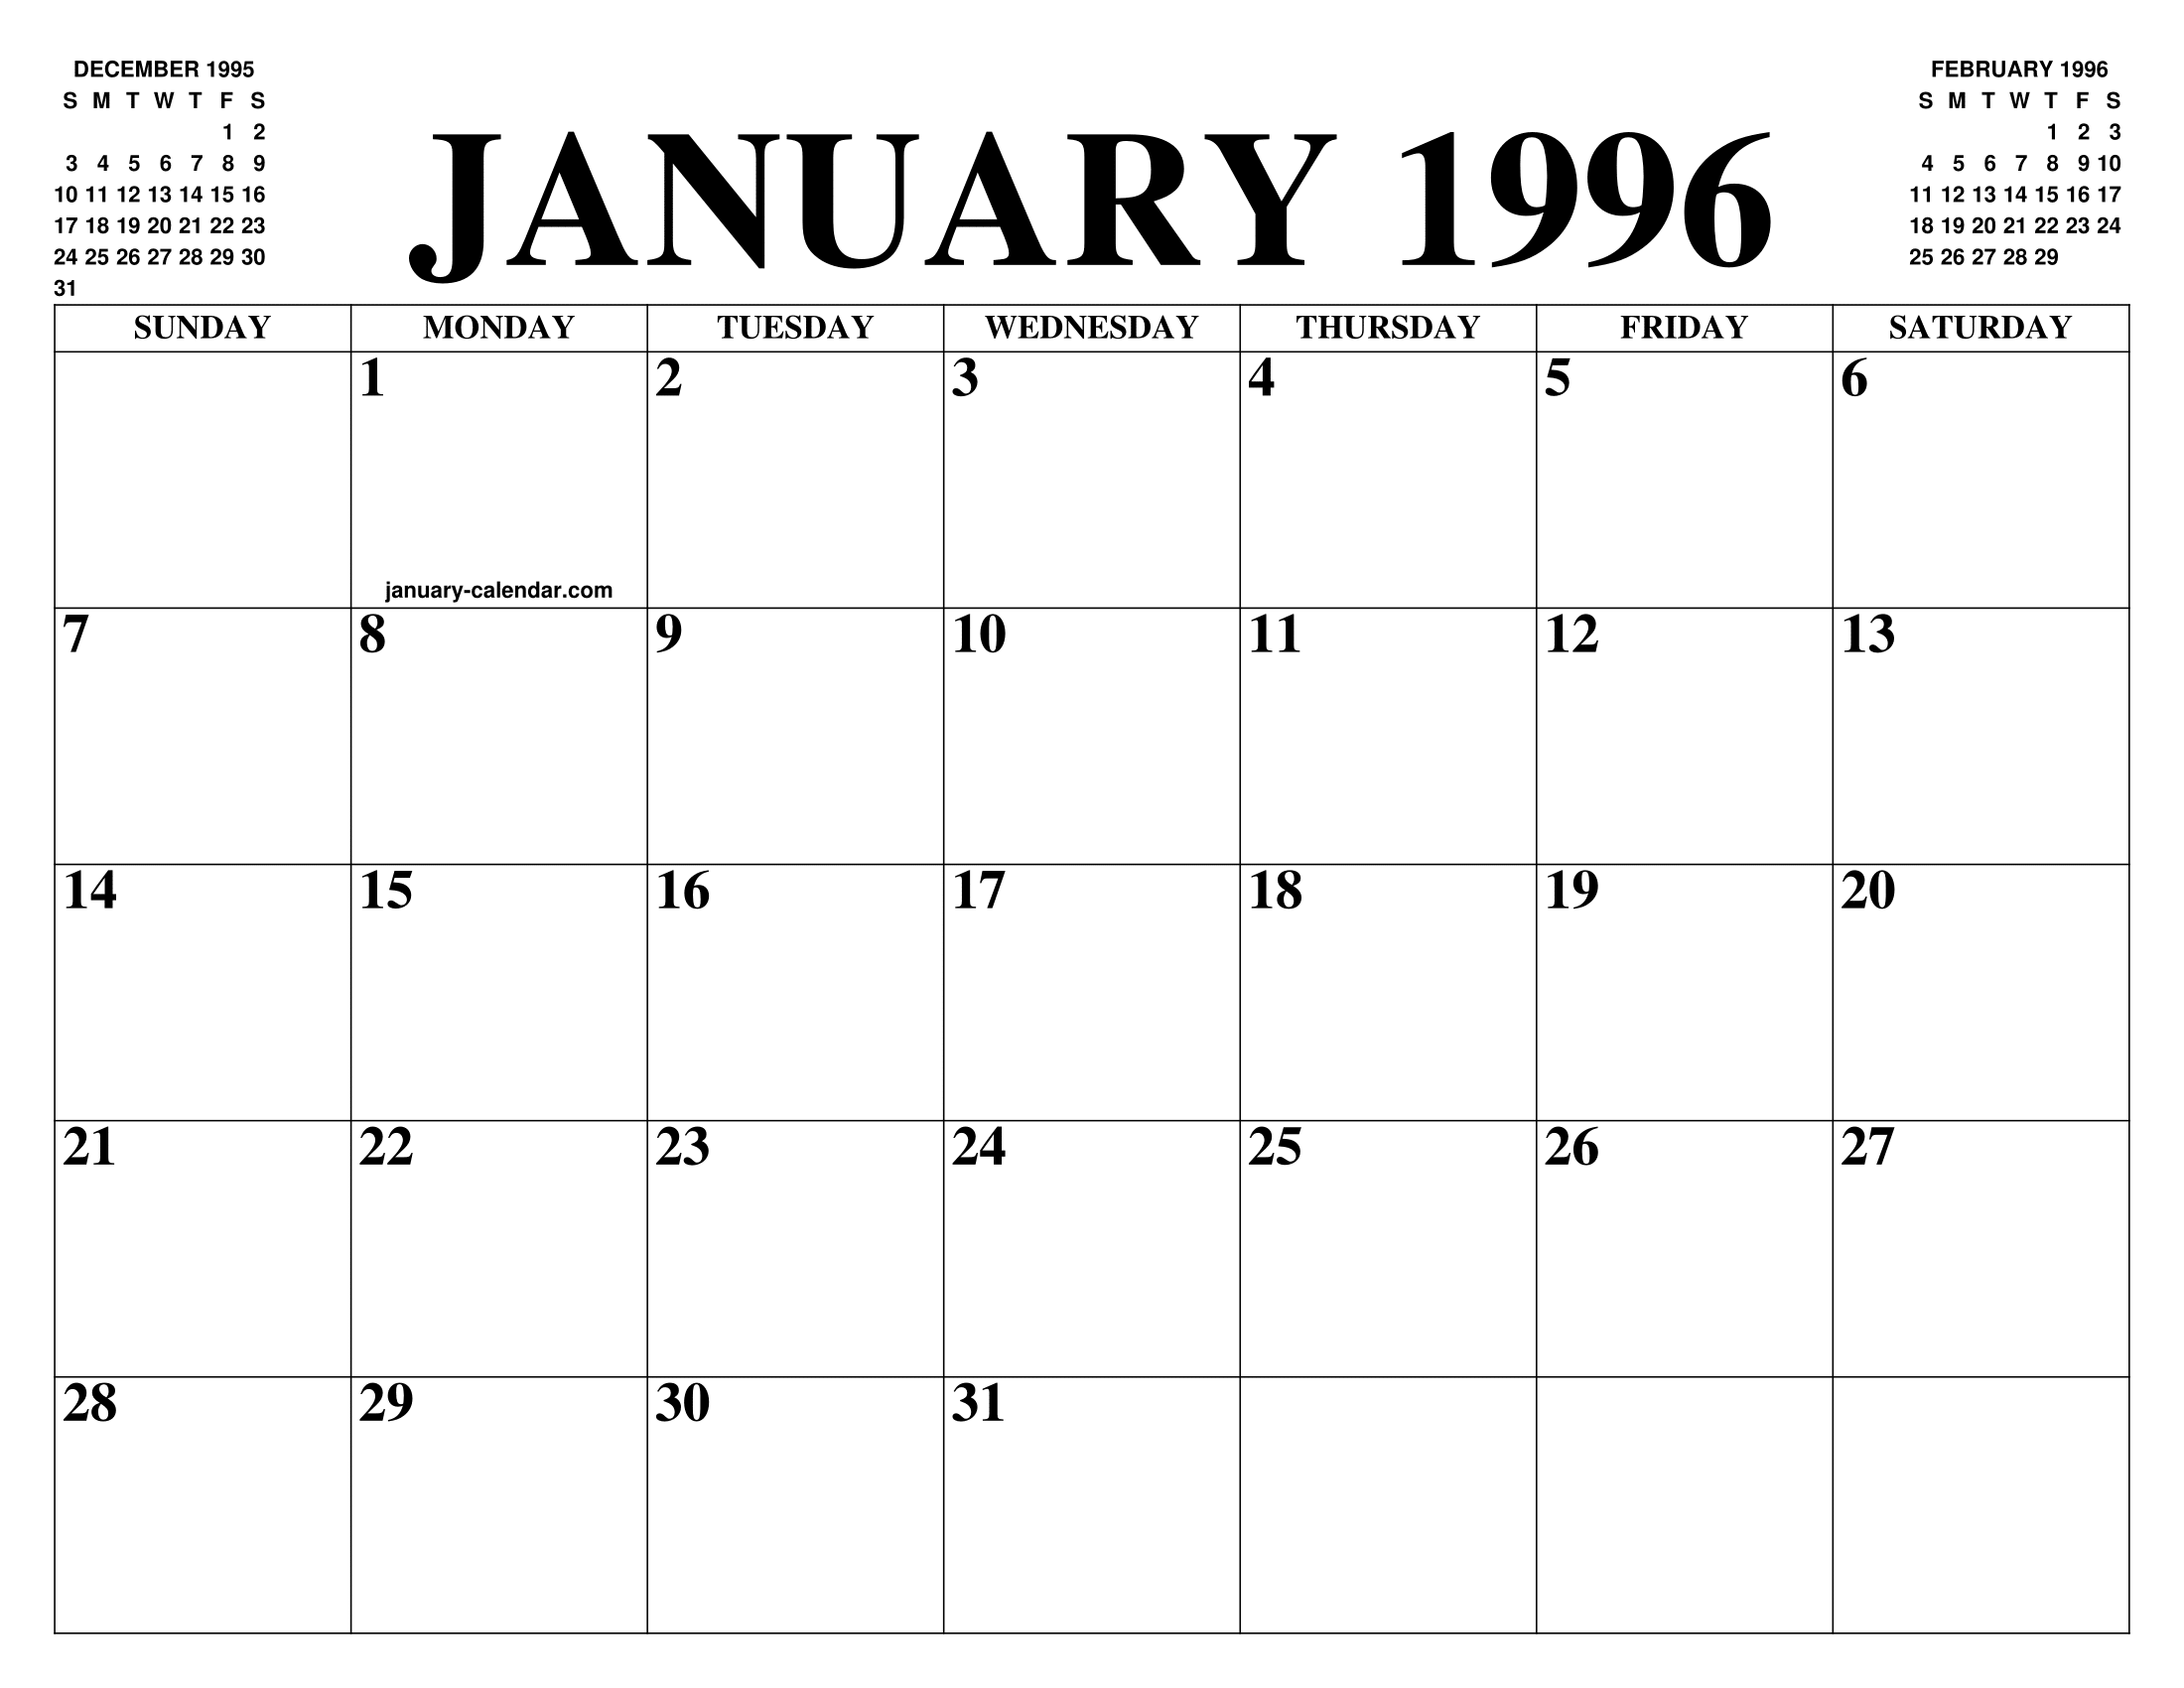 JANUARY 1996 CALENDAR OF THE MONTH: FREE PRINTABLE JANUARY CALENDAR OF